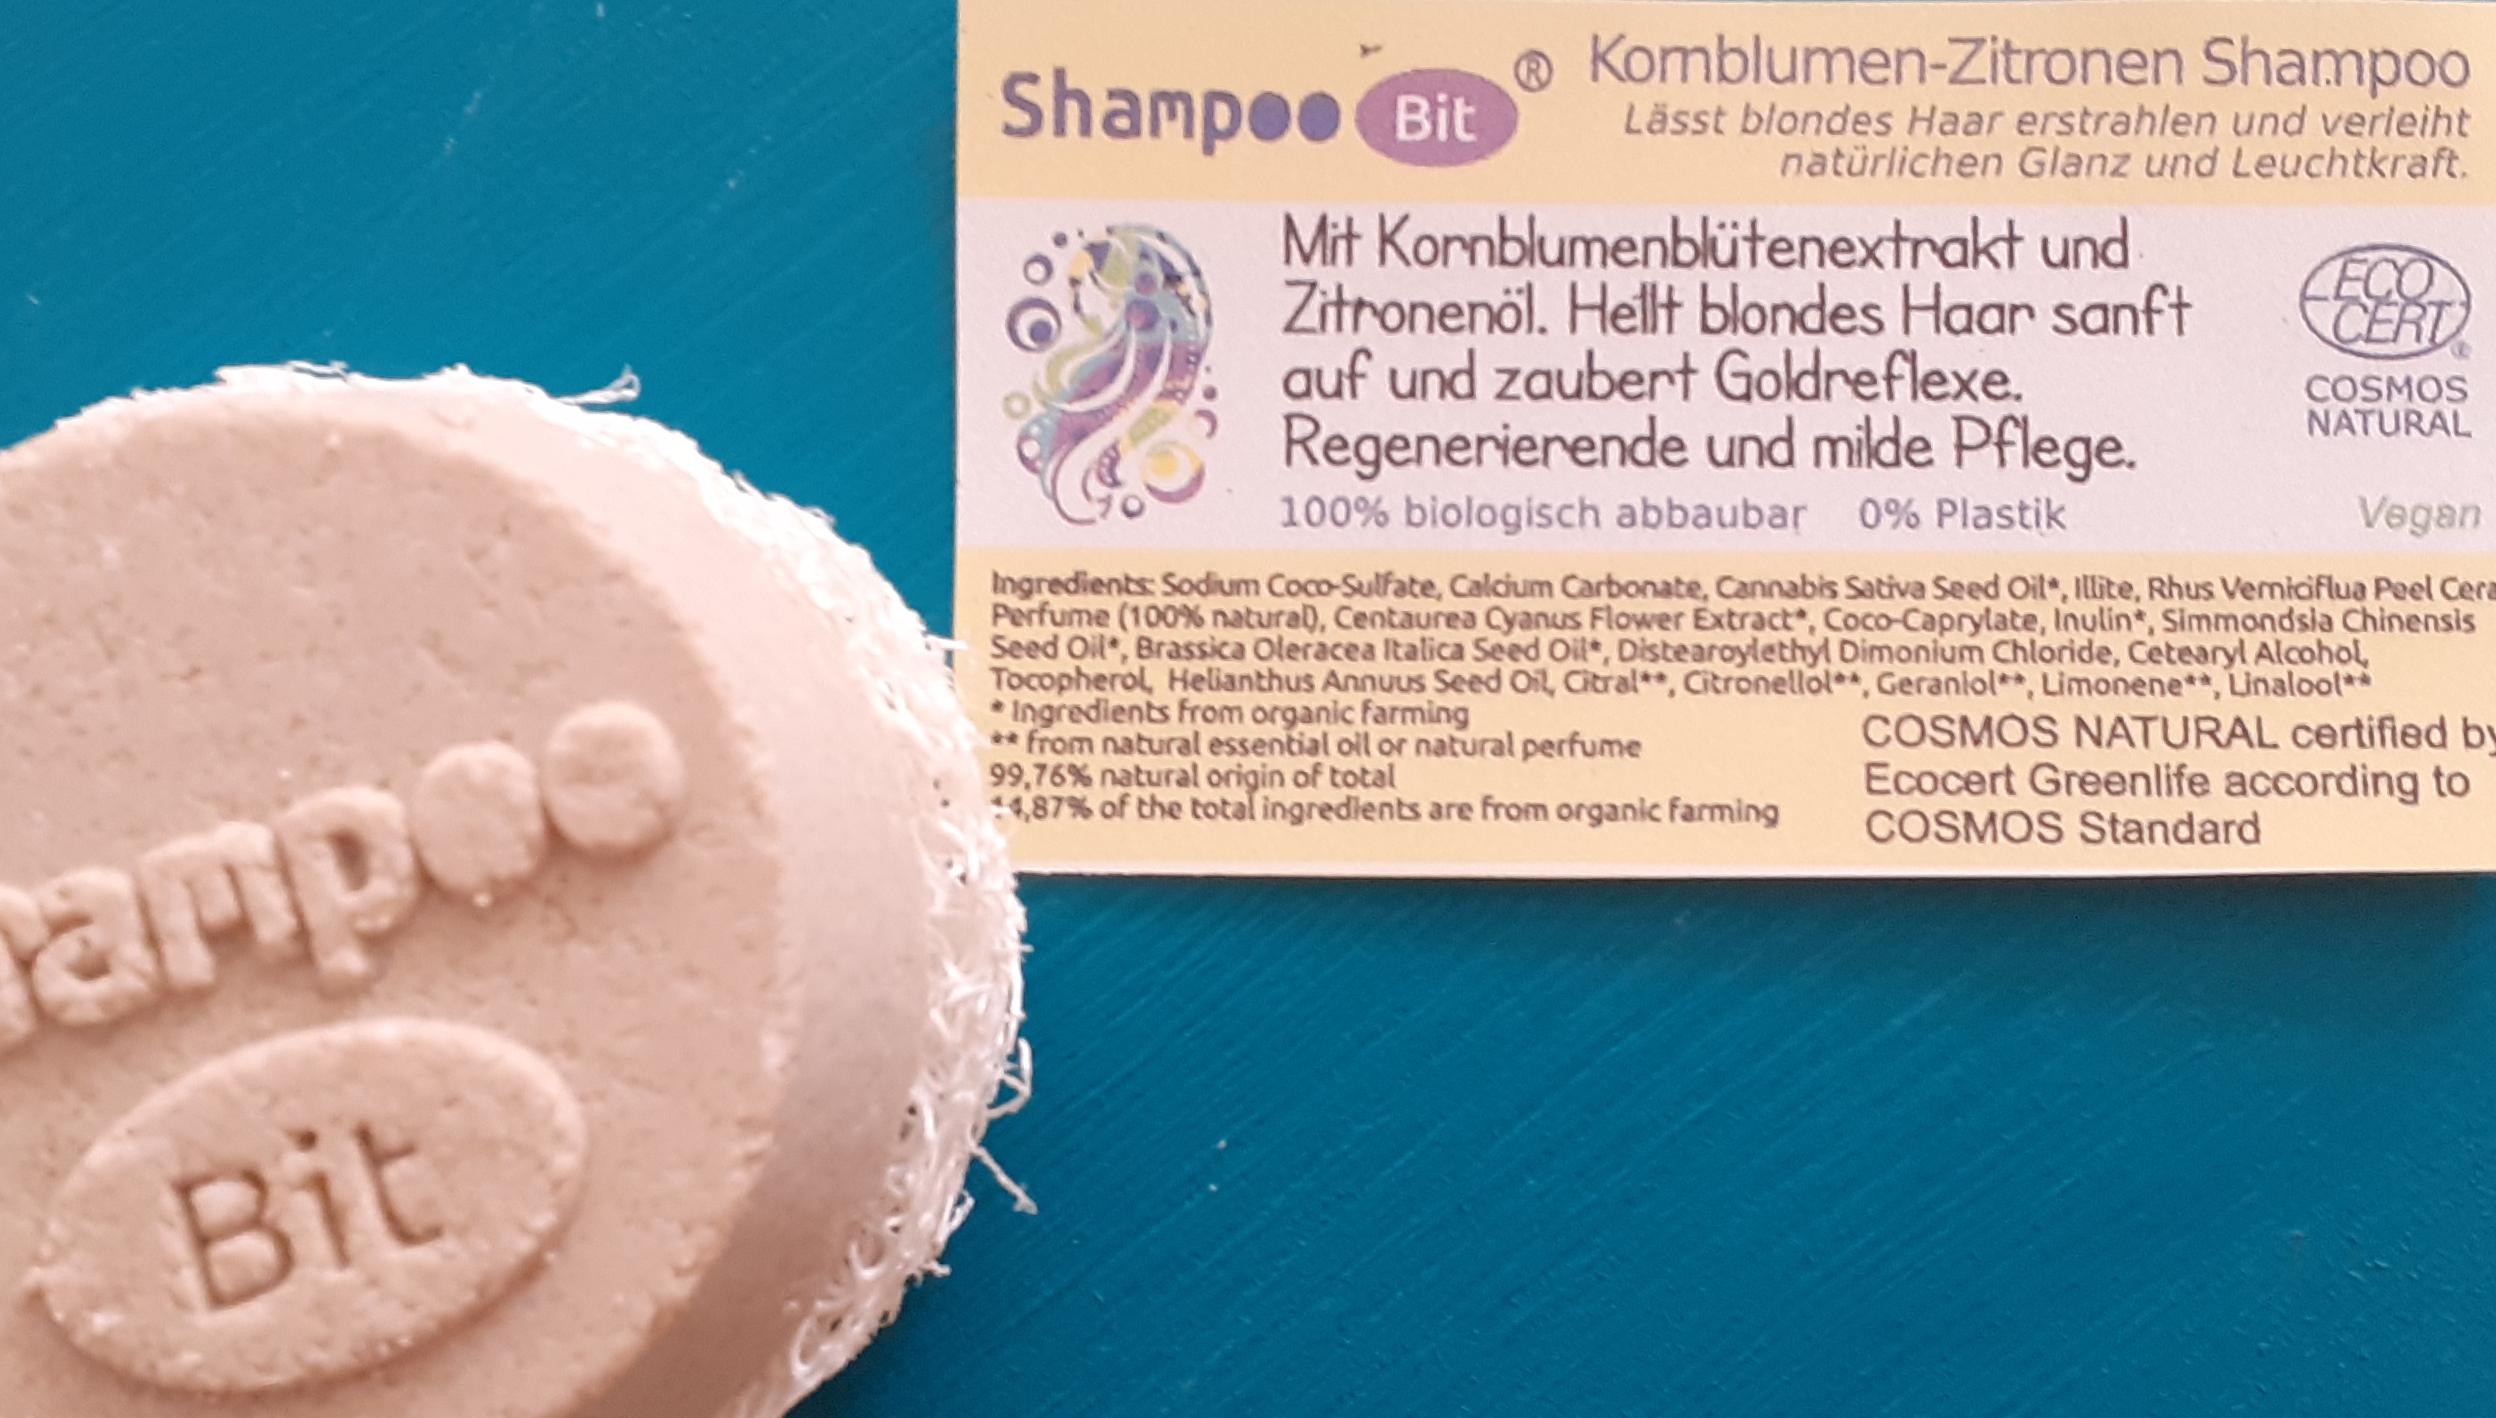 Shampoo Bit von Rosenrot, Kornblume Zitrone